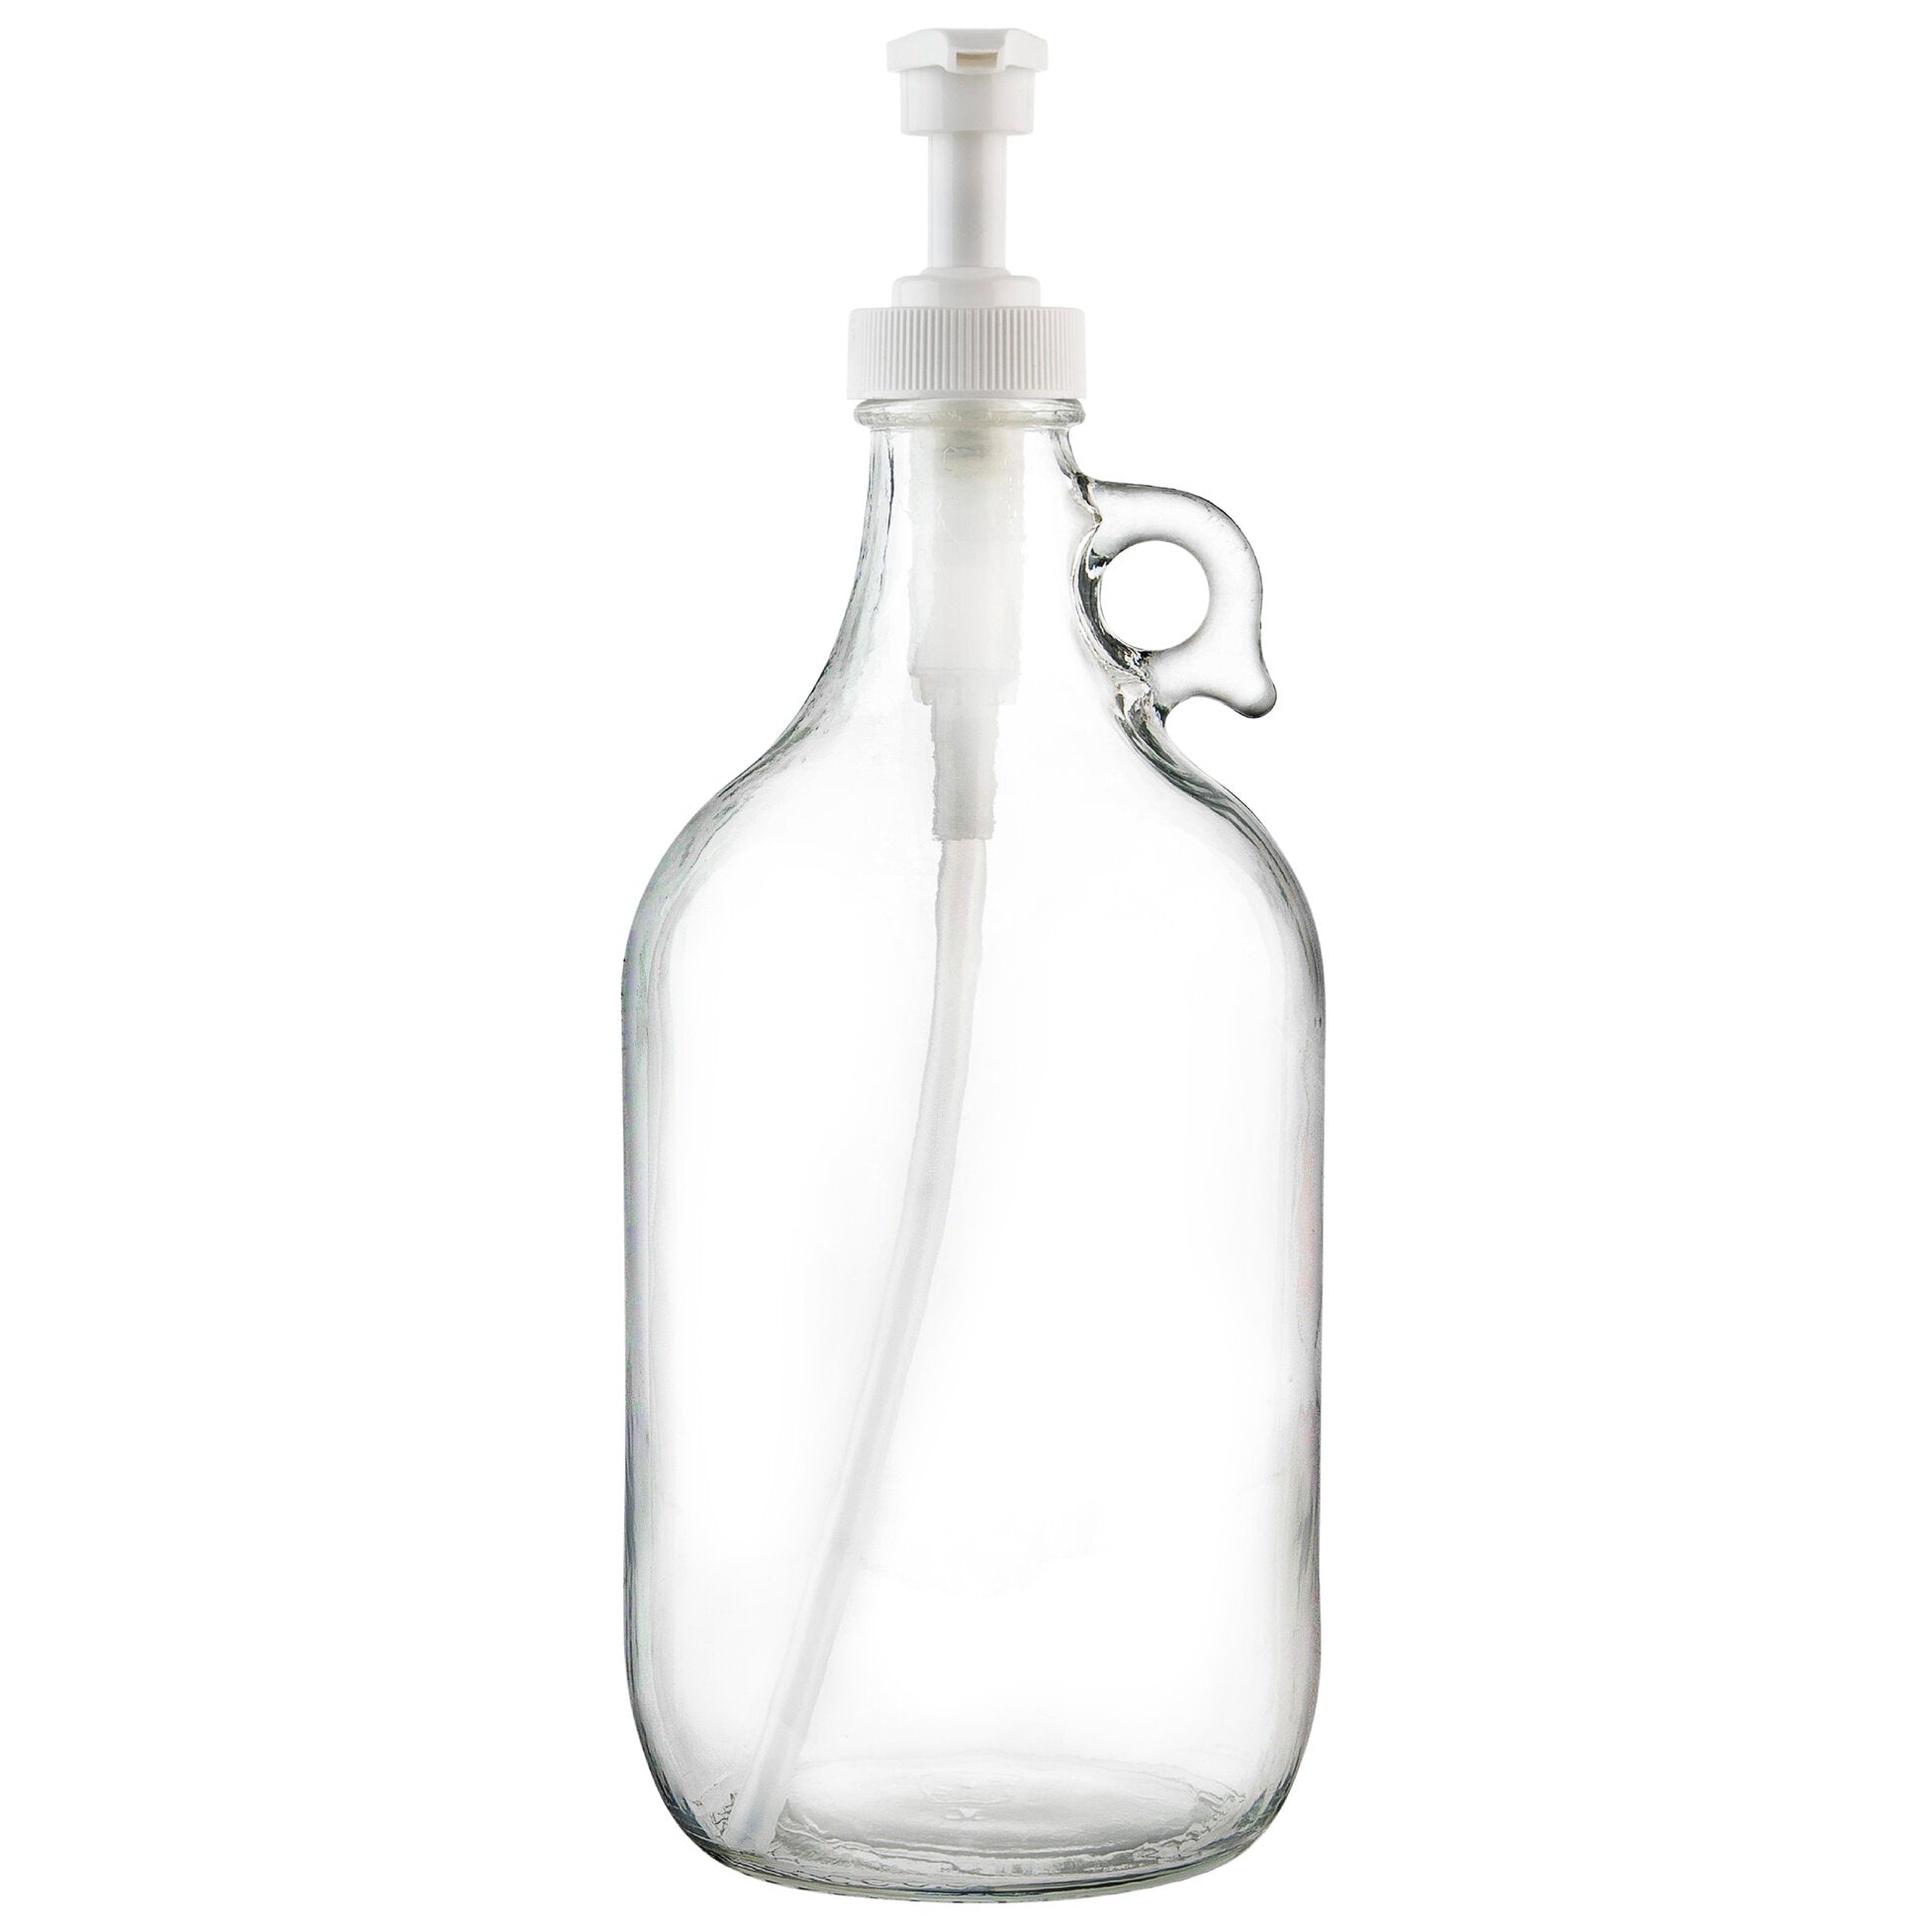 Empty 1-Gallon Bottle With Dispenser Pump 